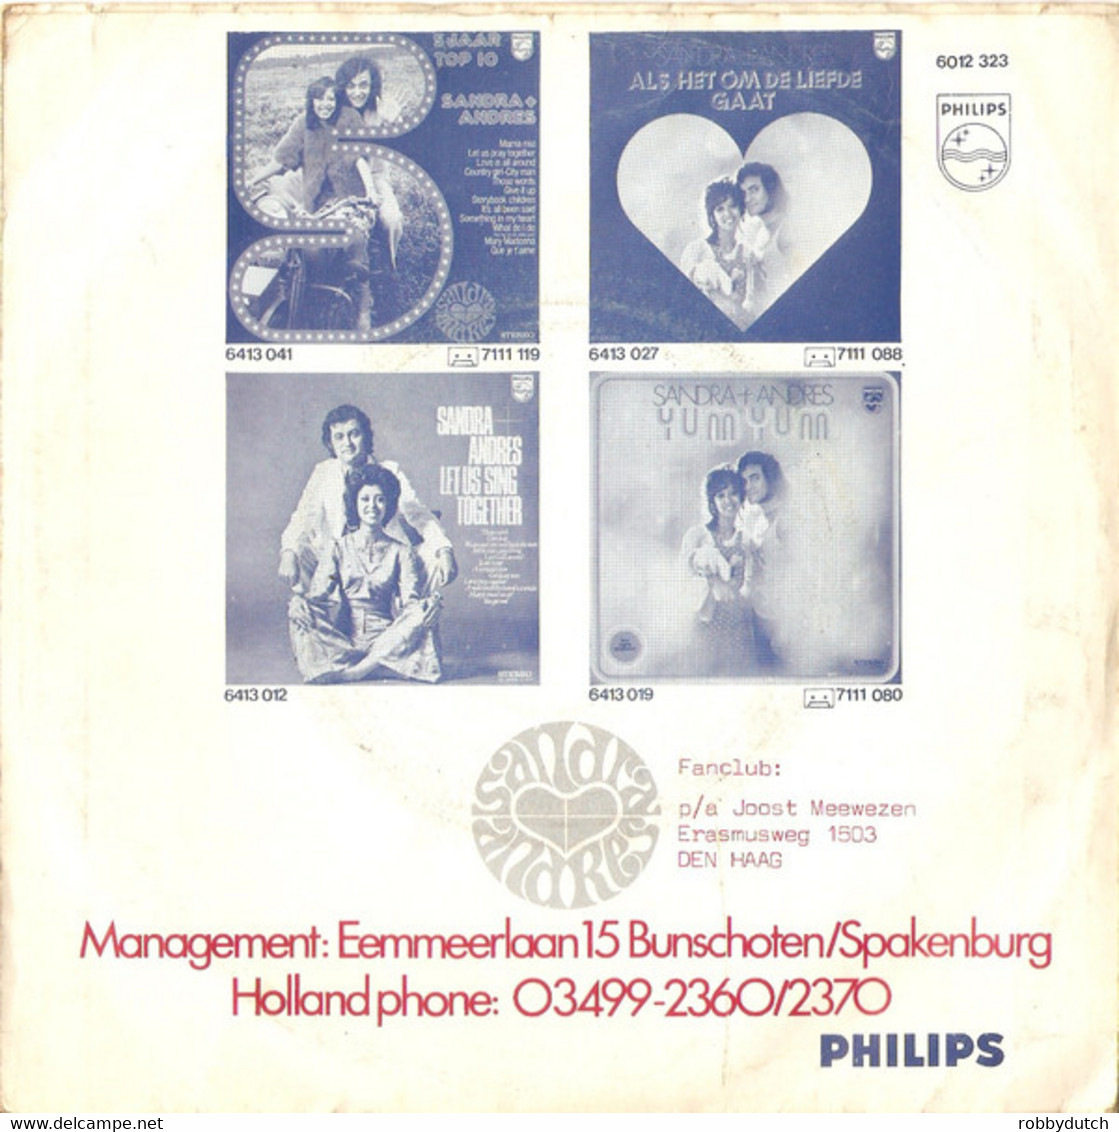 * 7" *  SANDRA & ANDRES - AIME-MOI (Holland 1973) - Sonstige - Niederländische Musik